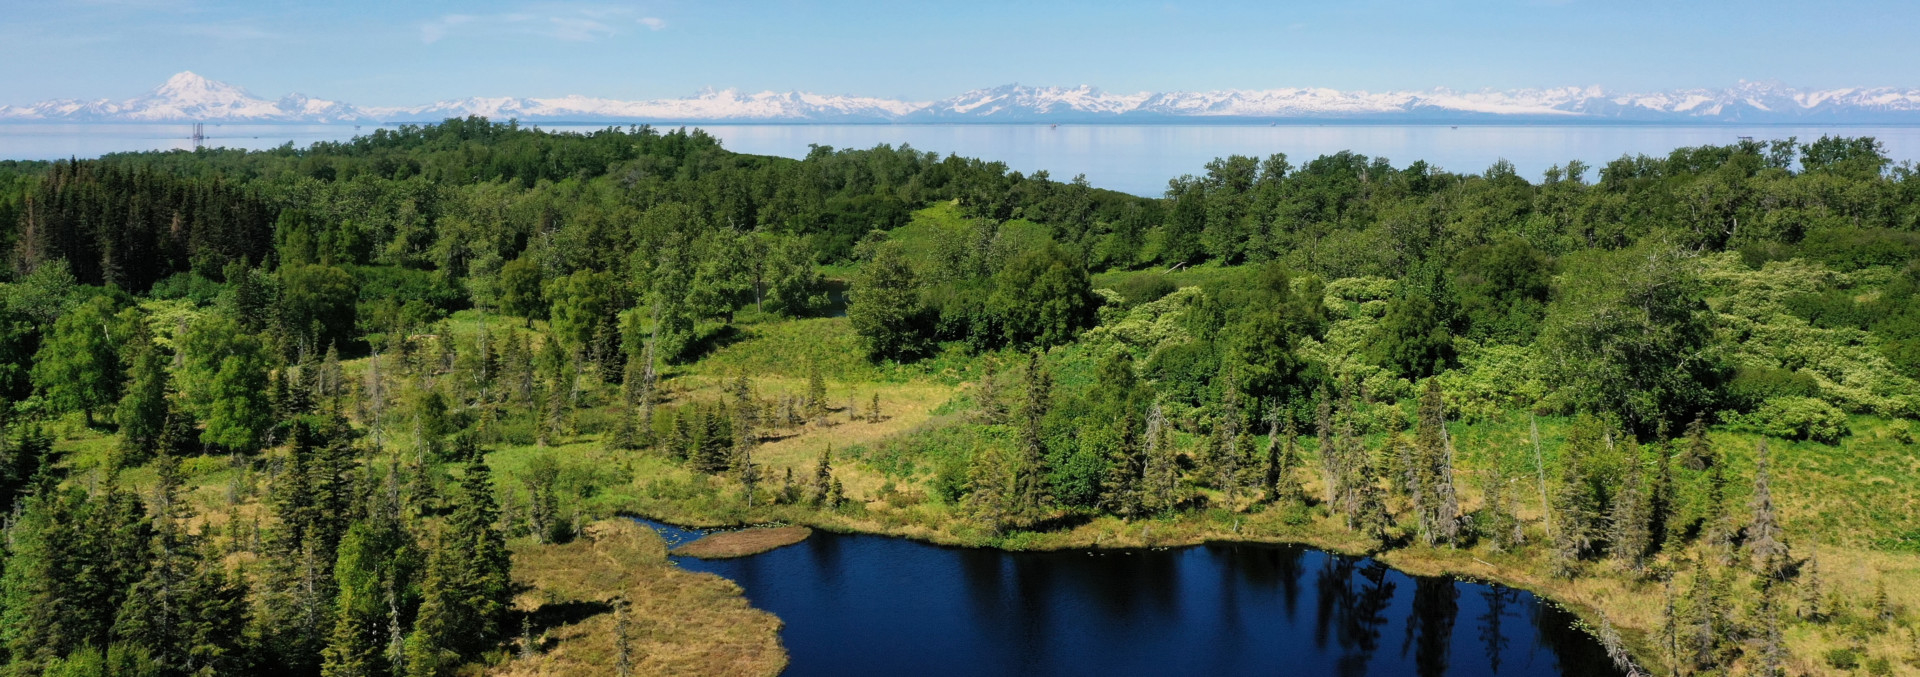 alaska property for sale high vista